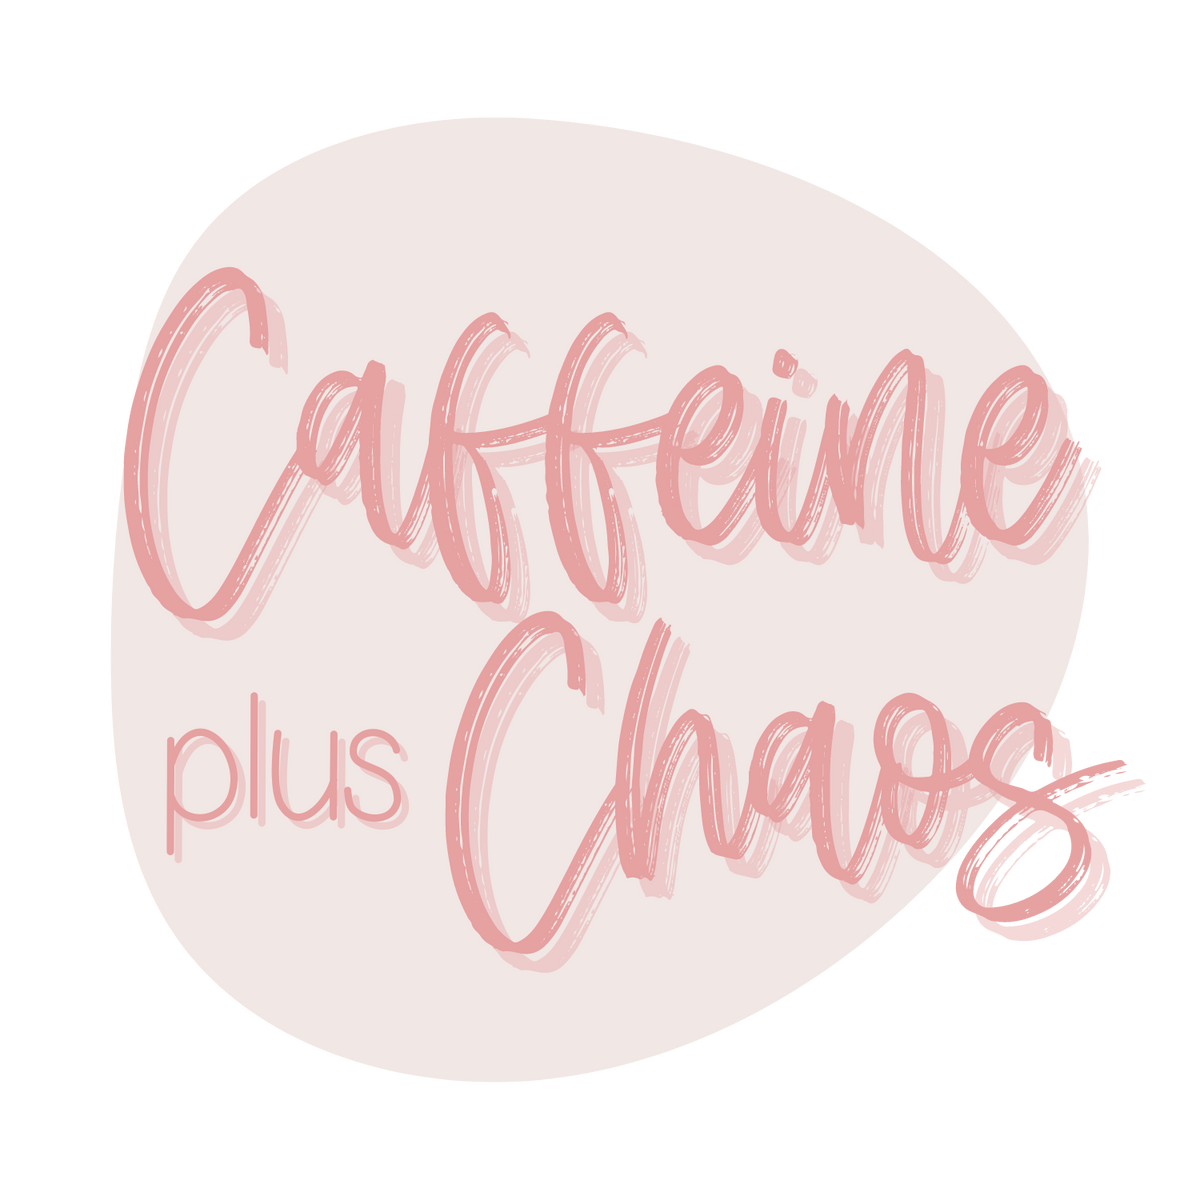 Caffeine Plus Chaos